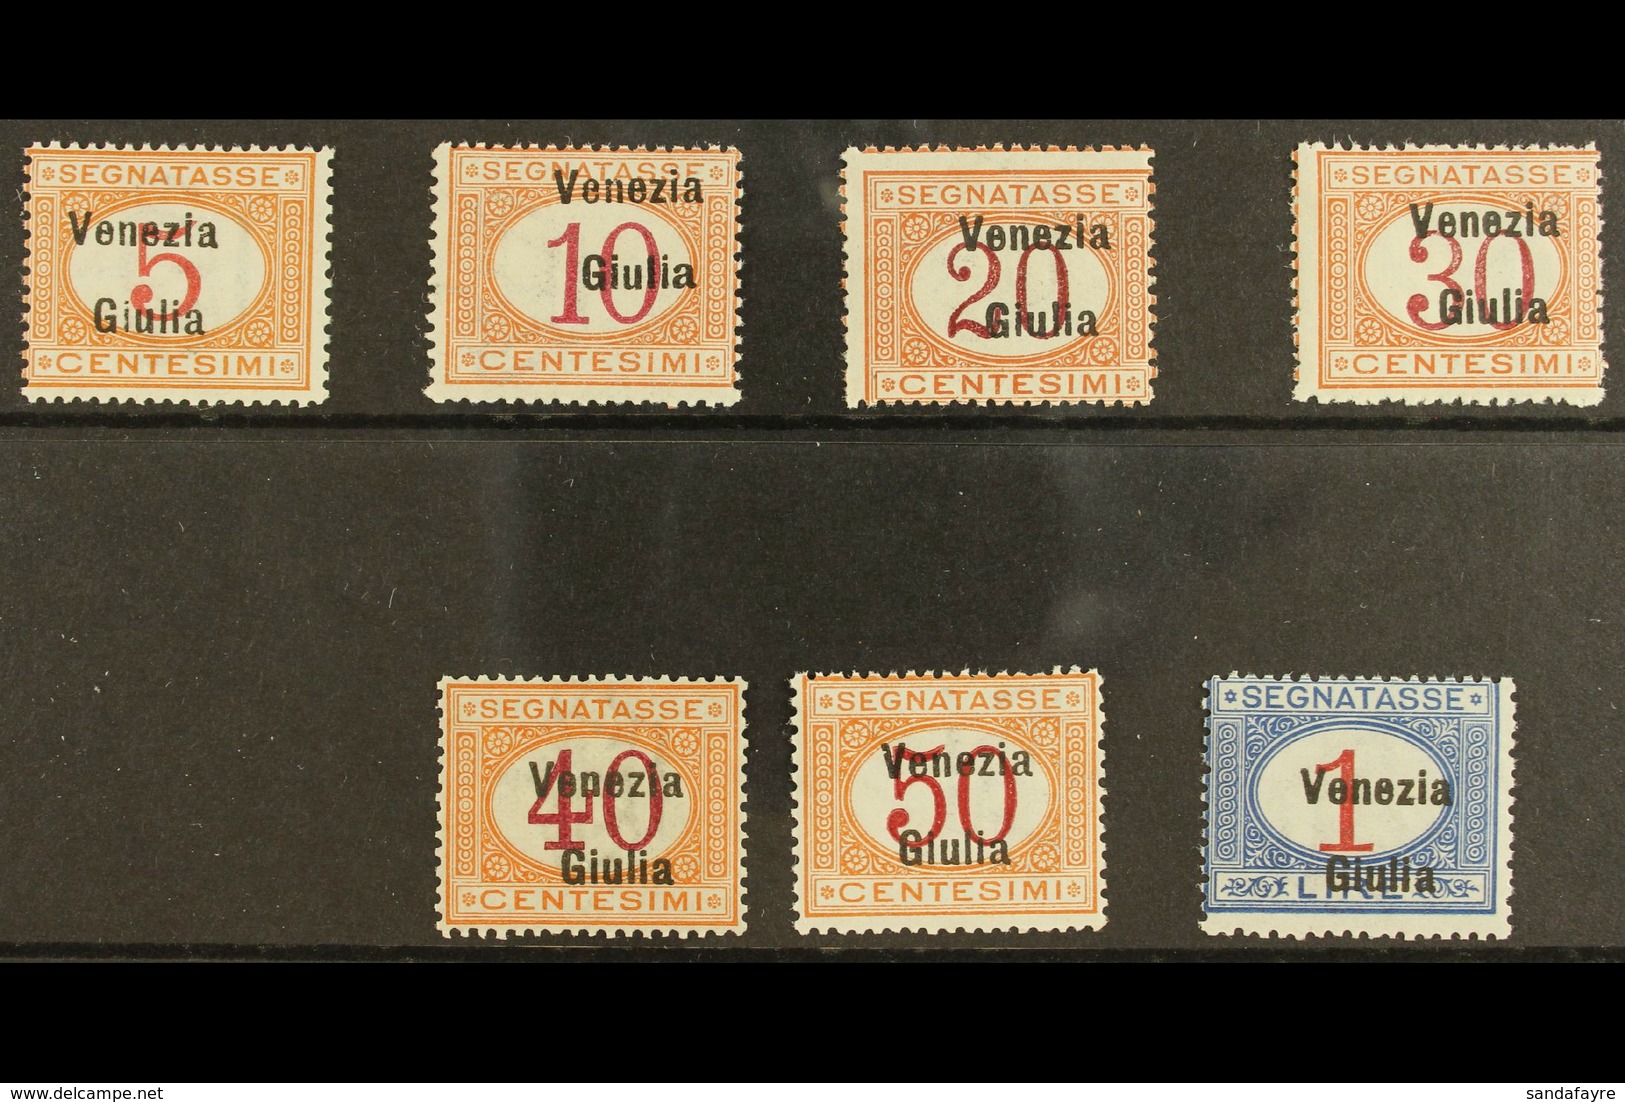 VENEZIA GIULIA POSTAGE DUES 1918 Overprint Set Complete, Sass S4, Very Fine Never Hinged Mint. Cat €2500 (£1900) Rare Se - Unclassified